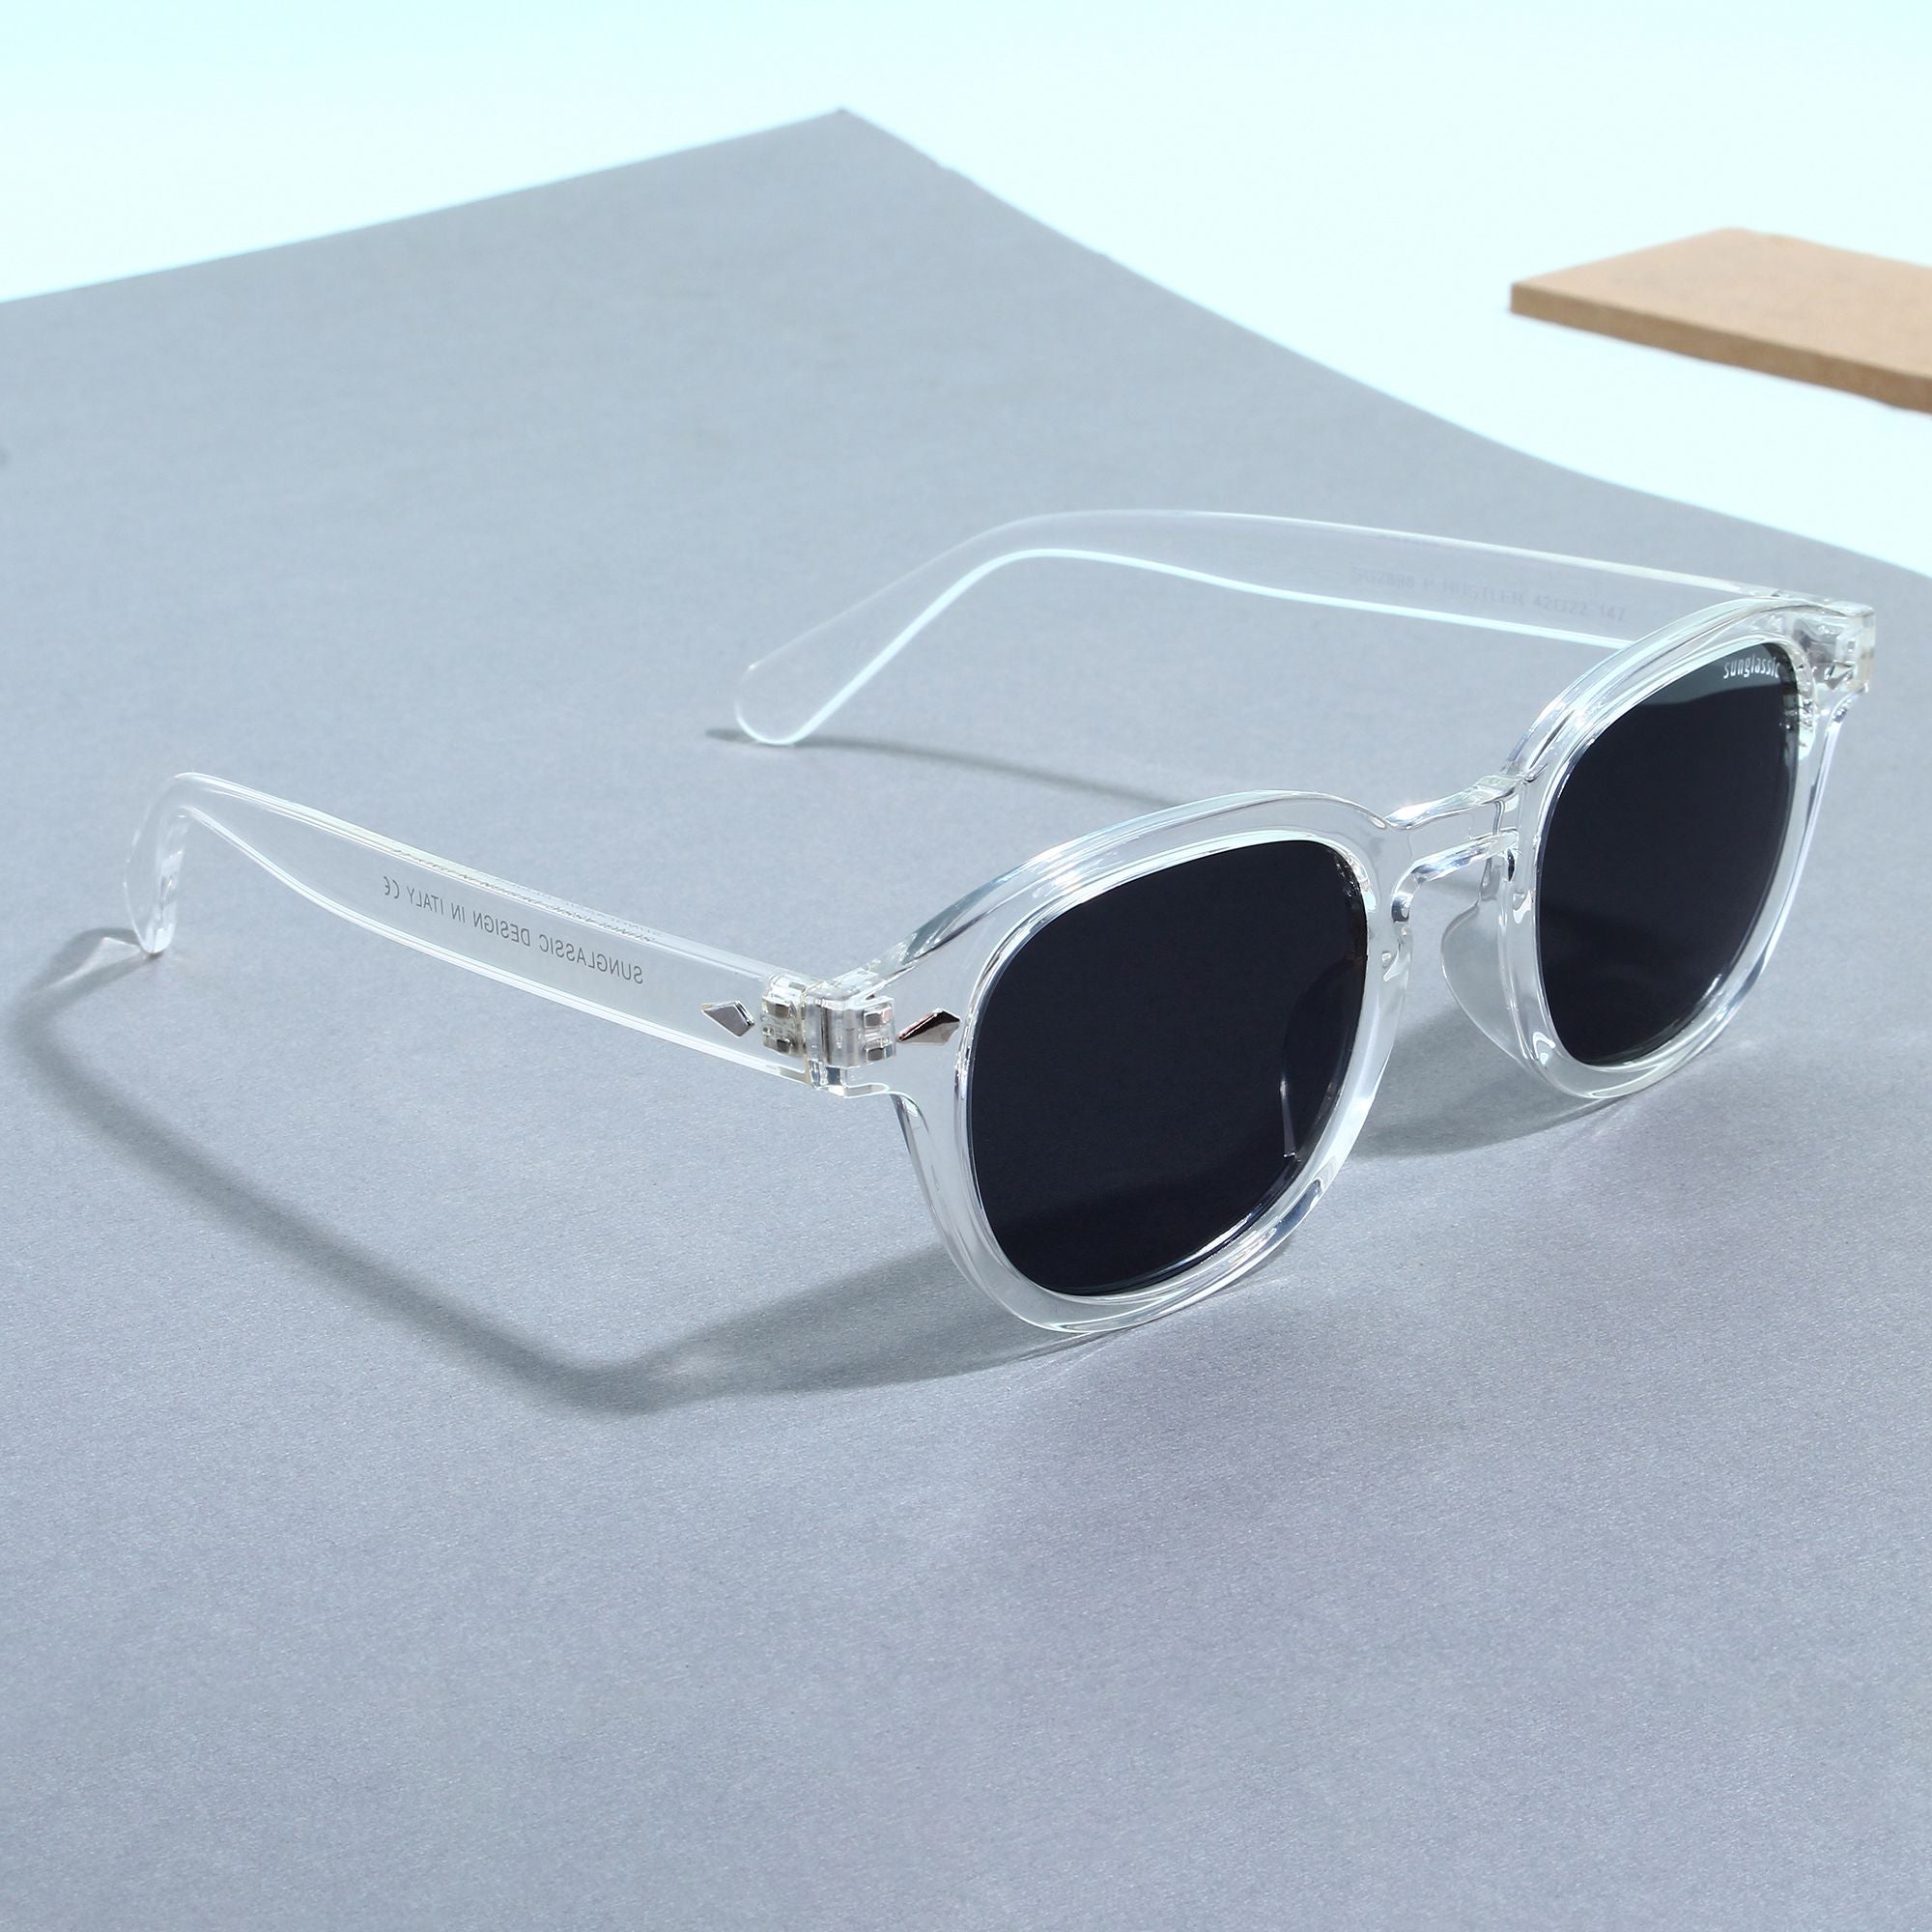 Hustler Clear Black Polarized Round Sunglasses